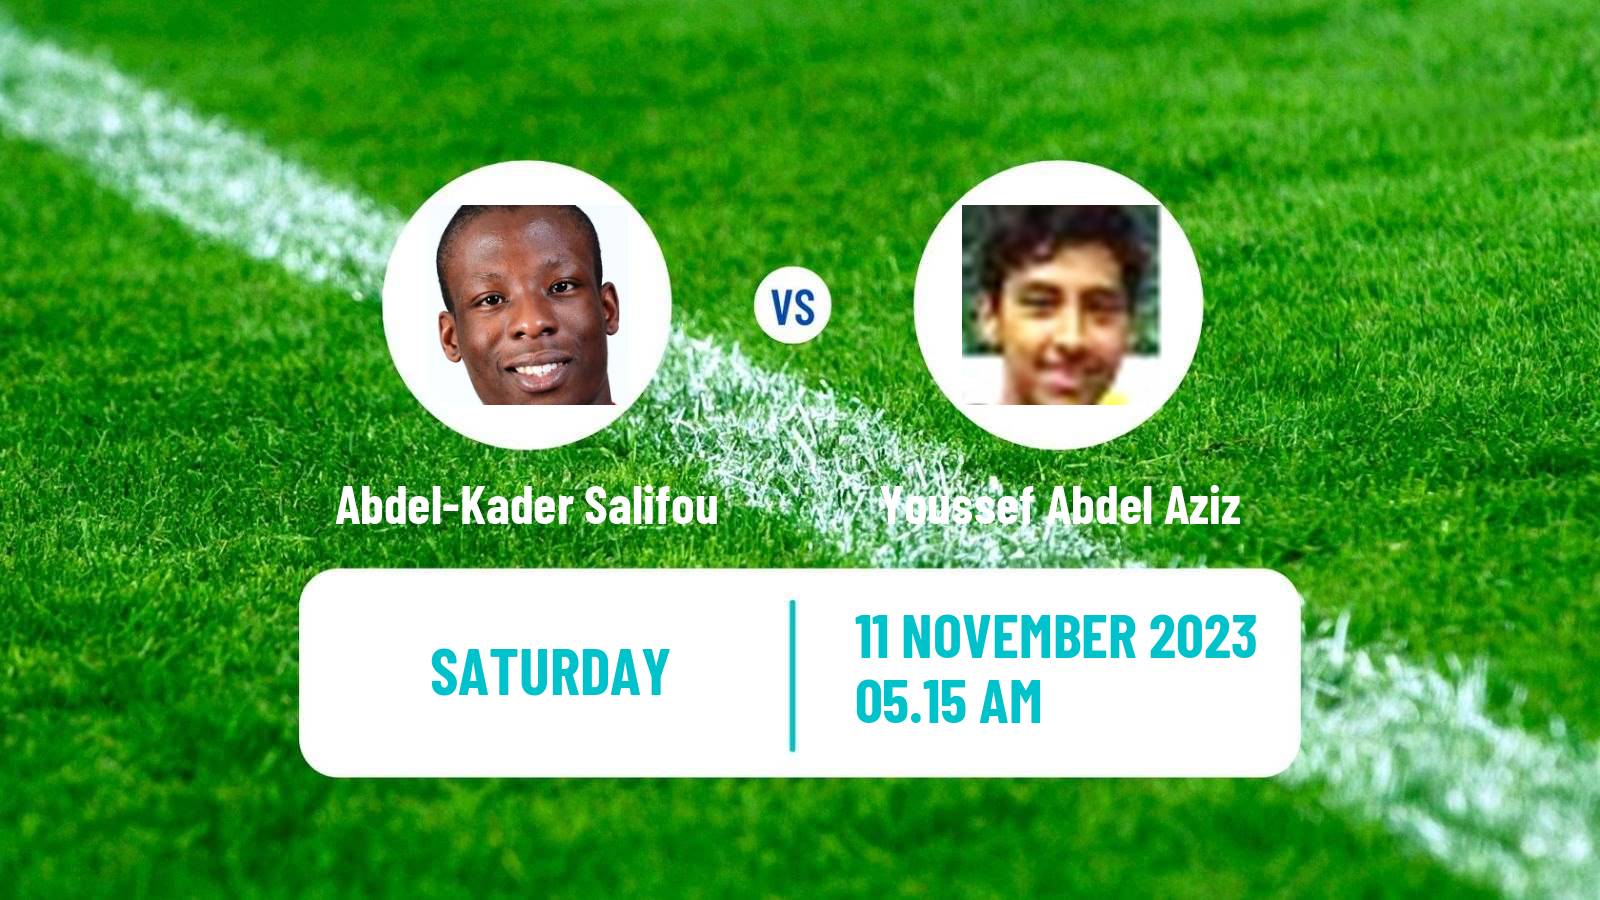 Table tennis Tt Star Series Men Abdel-Kader Salifou - Youssef Abdel Aziz